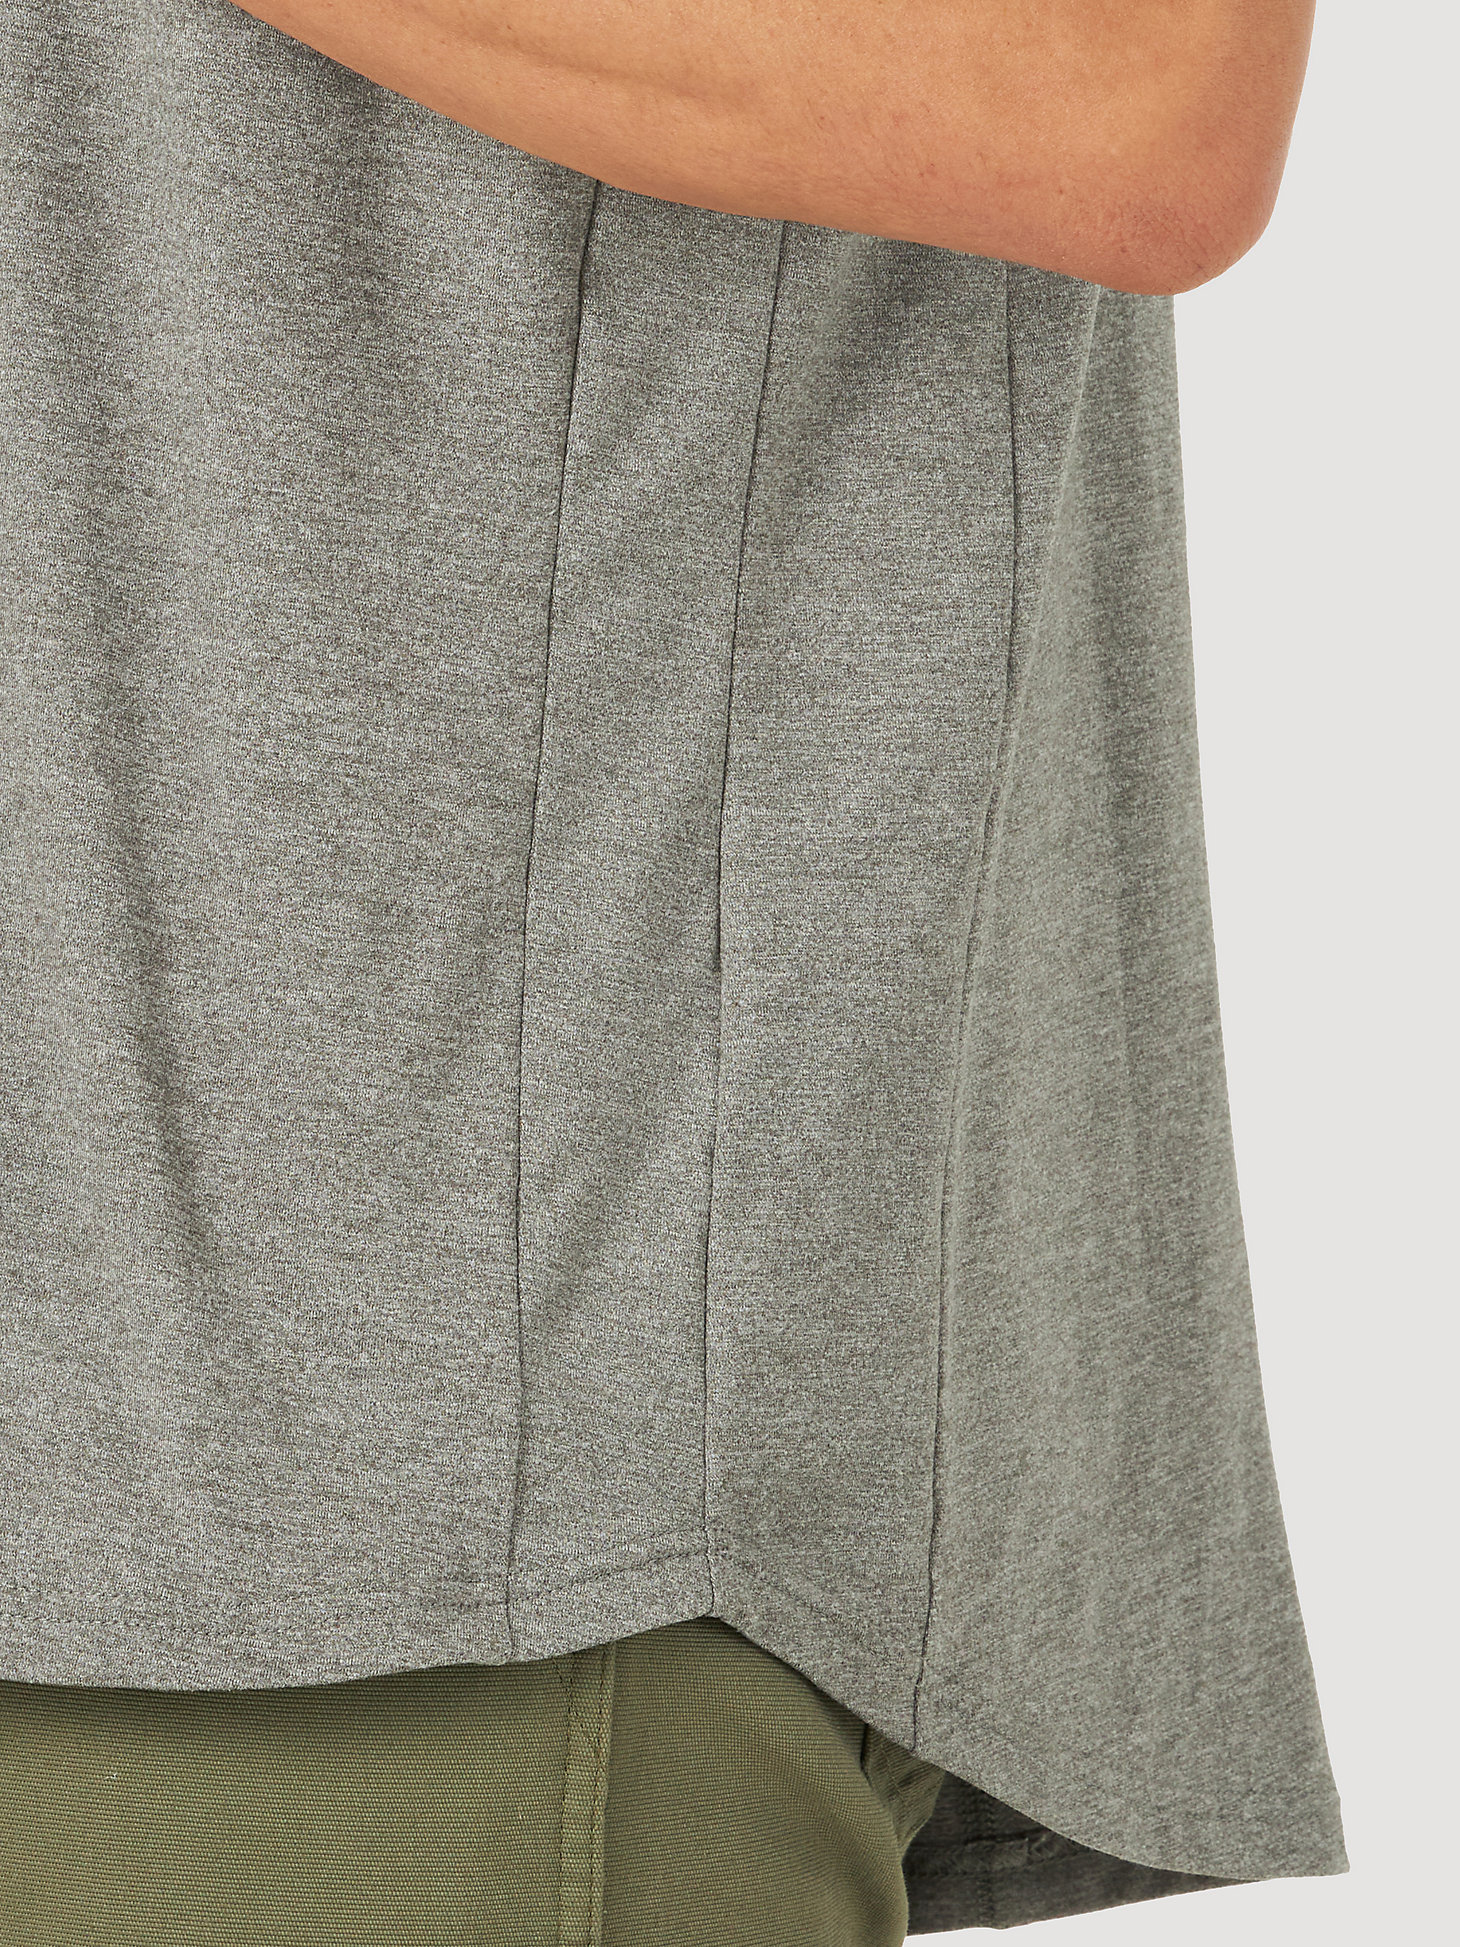 ATG by Wrangler™ Men's Short Sleeve Performance Knit Shirt in Heather Grey alternative view 4